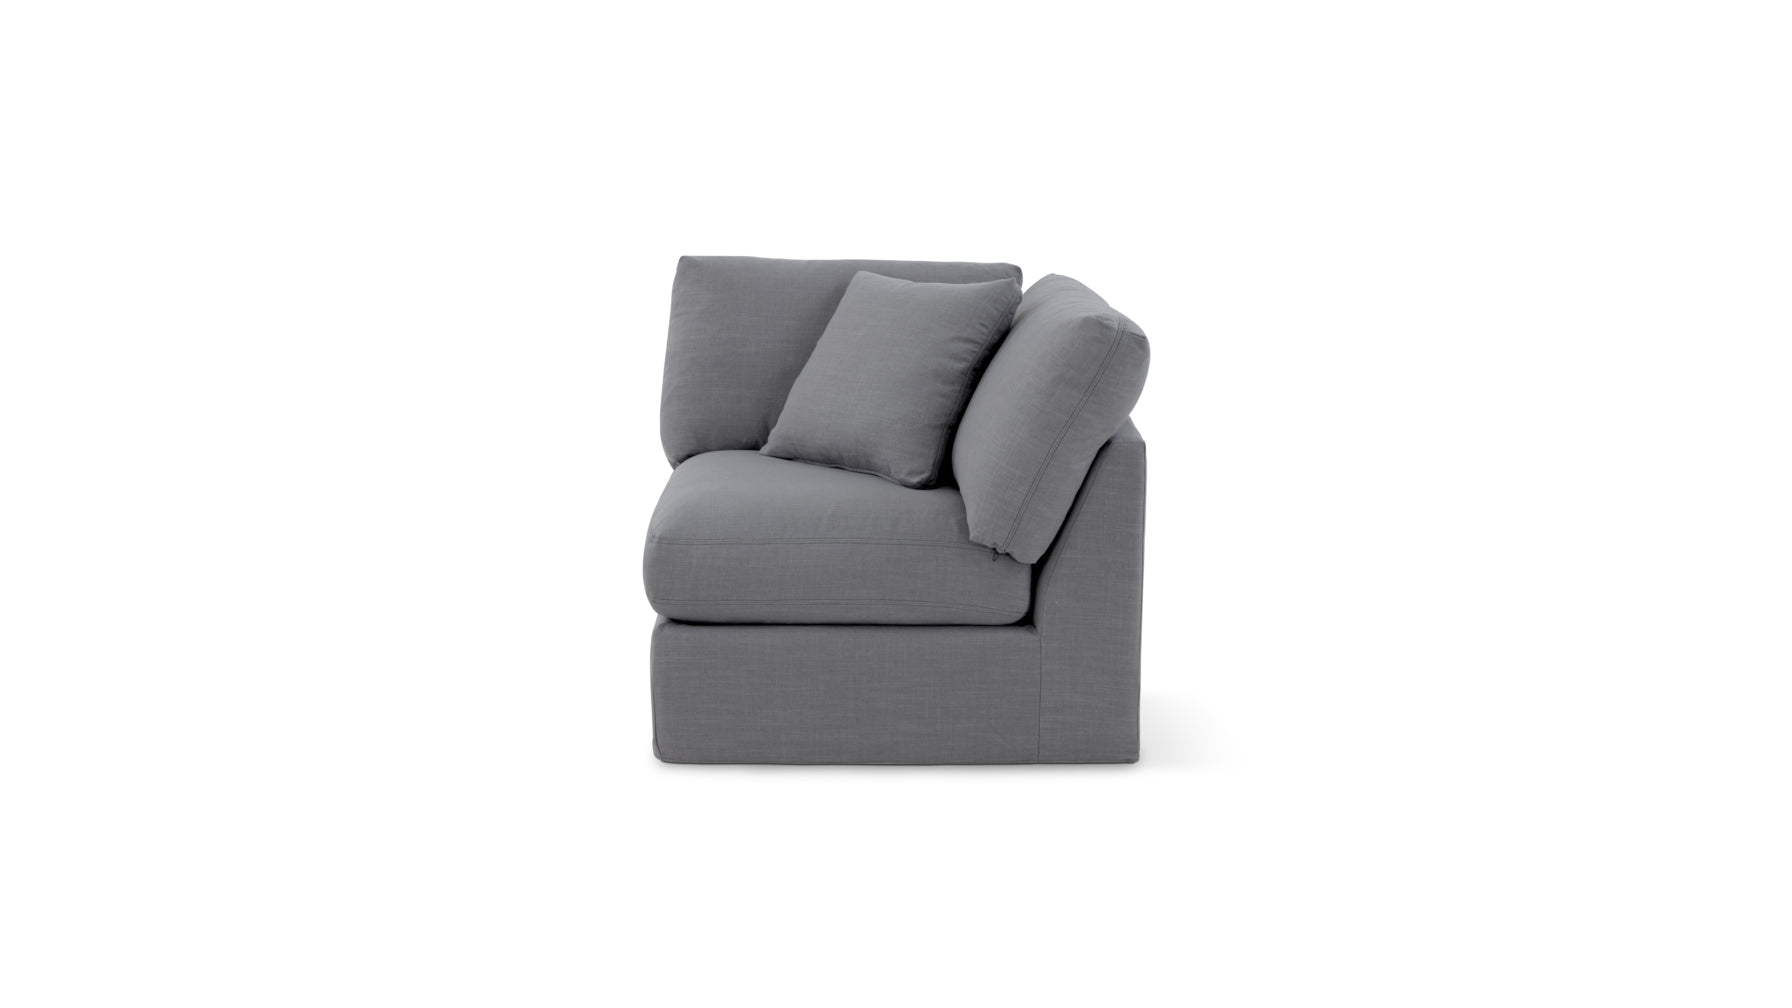 Slipcover - Get Together™ Corner Chair, Standard, Moonlight (Left Or Right) - Image 2